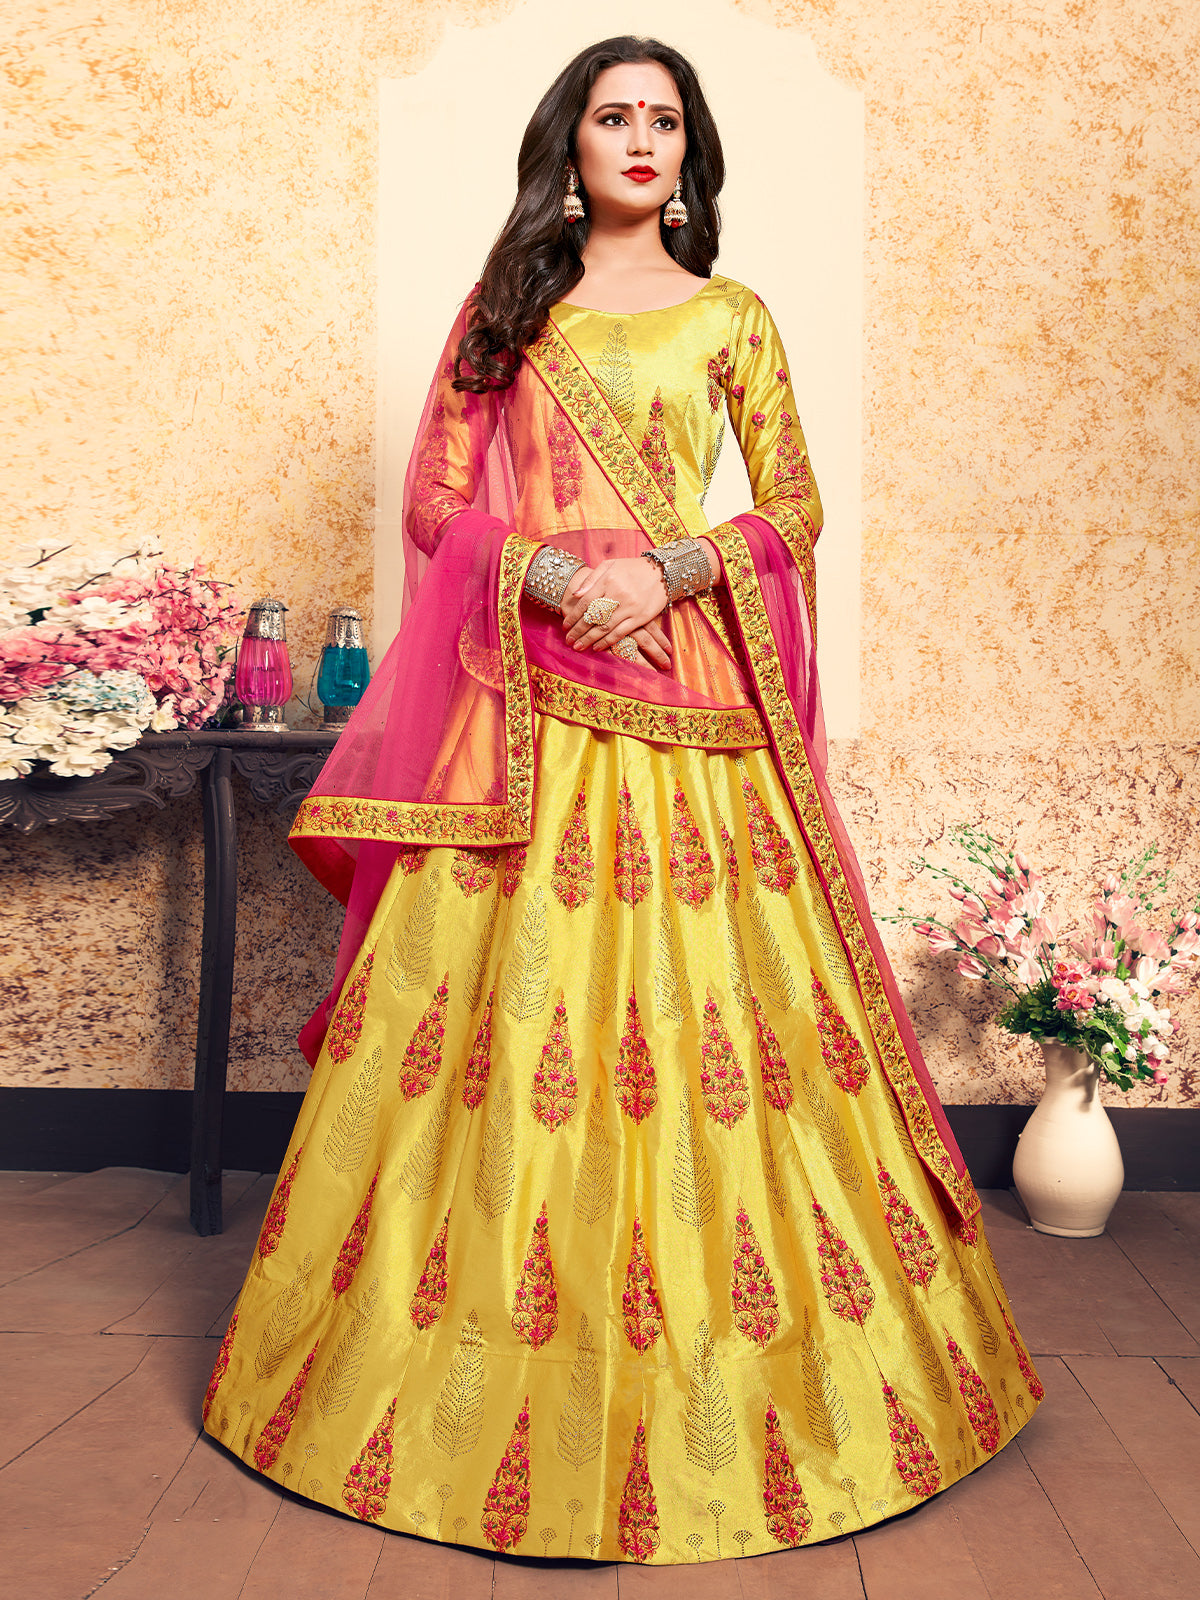 Astonishing Pink & Yellow Lehenga Choli | Bridal lehenga online, Designer  lehnga choli, Bridal lehenga collection